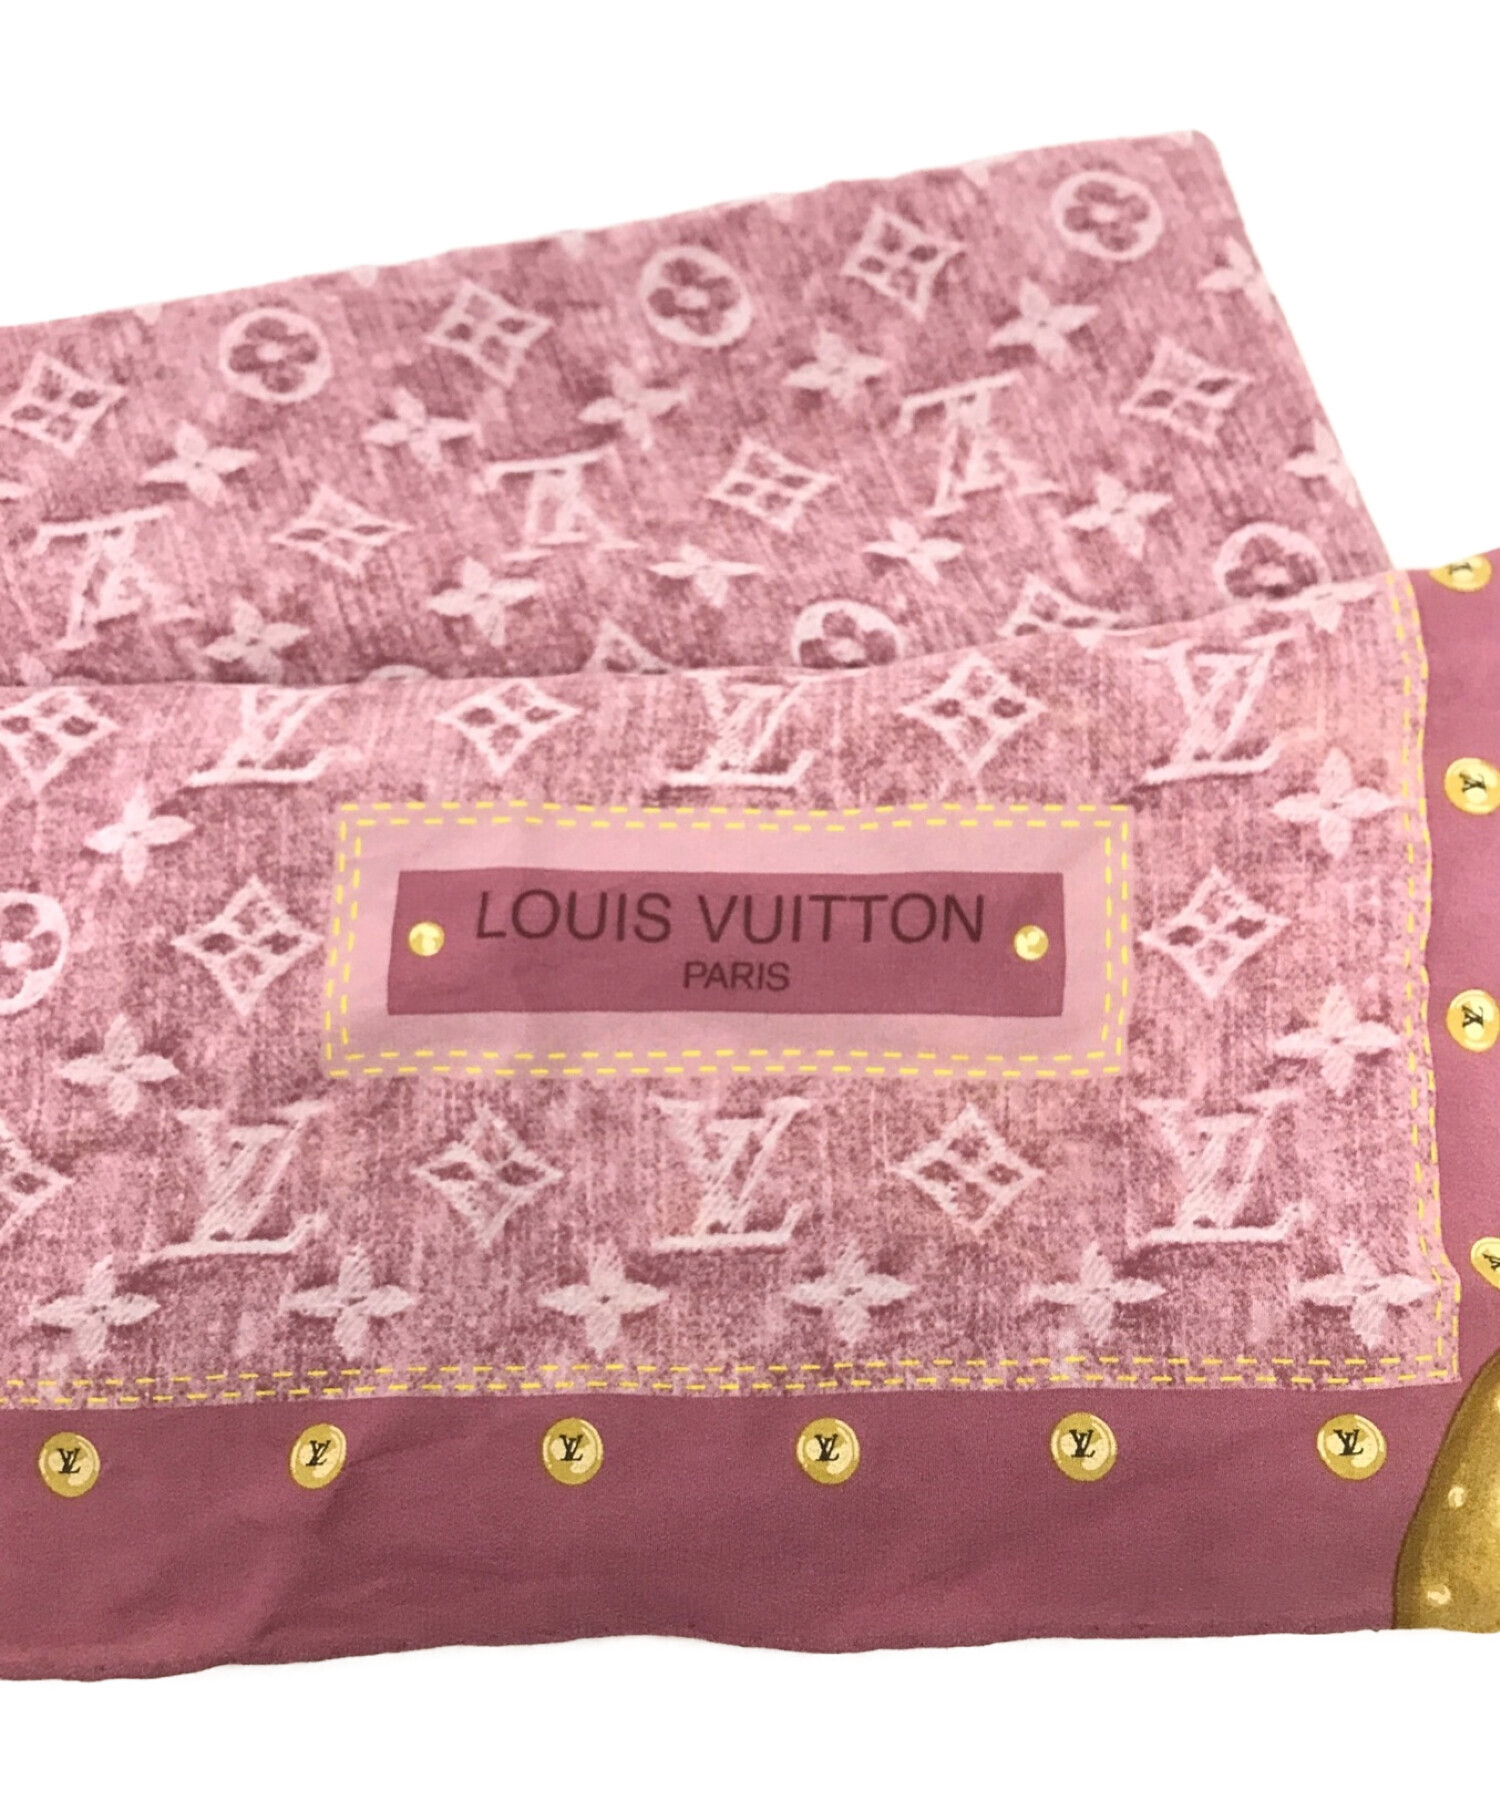 LOUIS VUITTON (ルイ ヴィトン) モノグラムシルクスカーフ ピンク